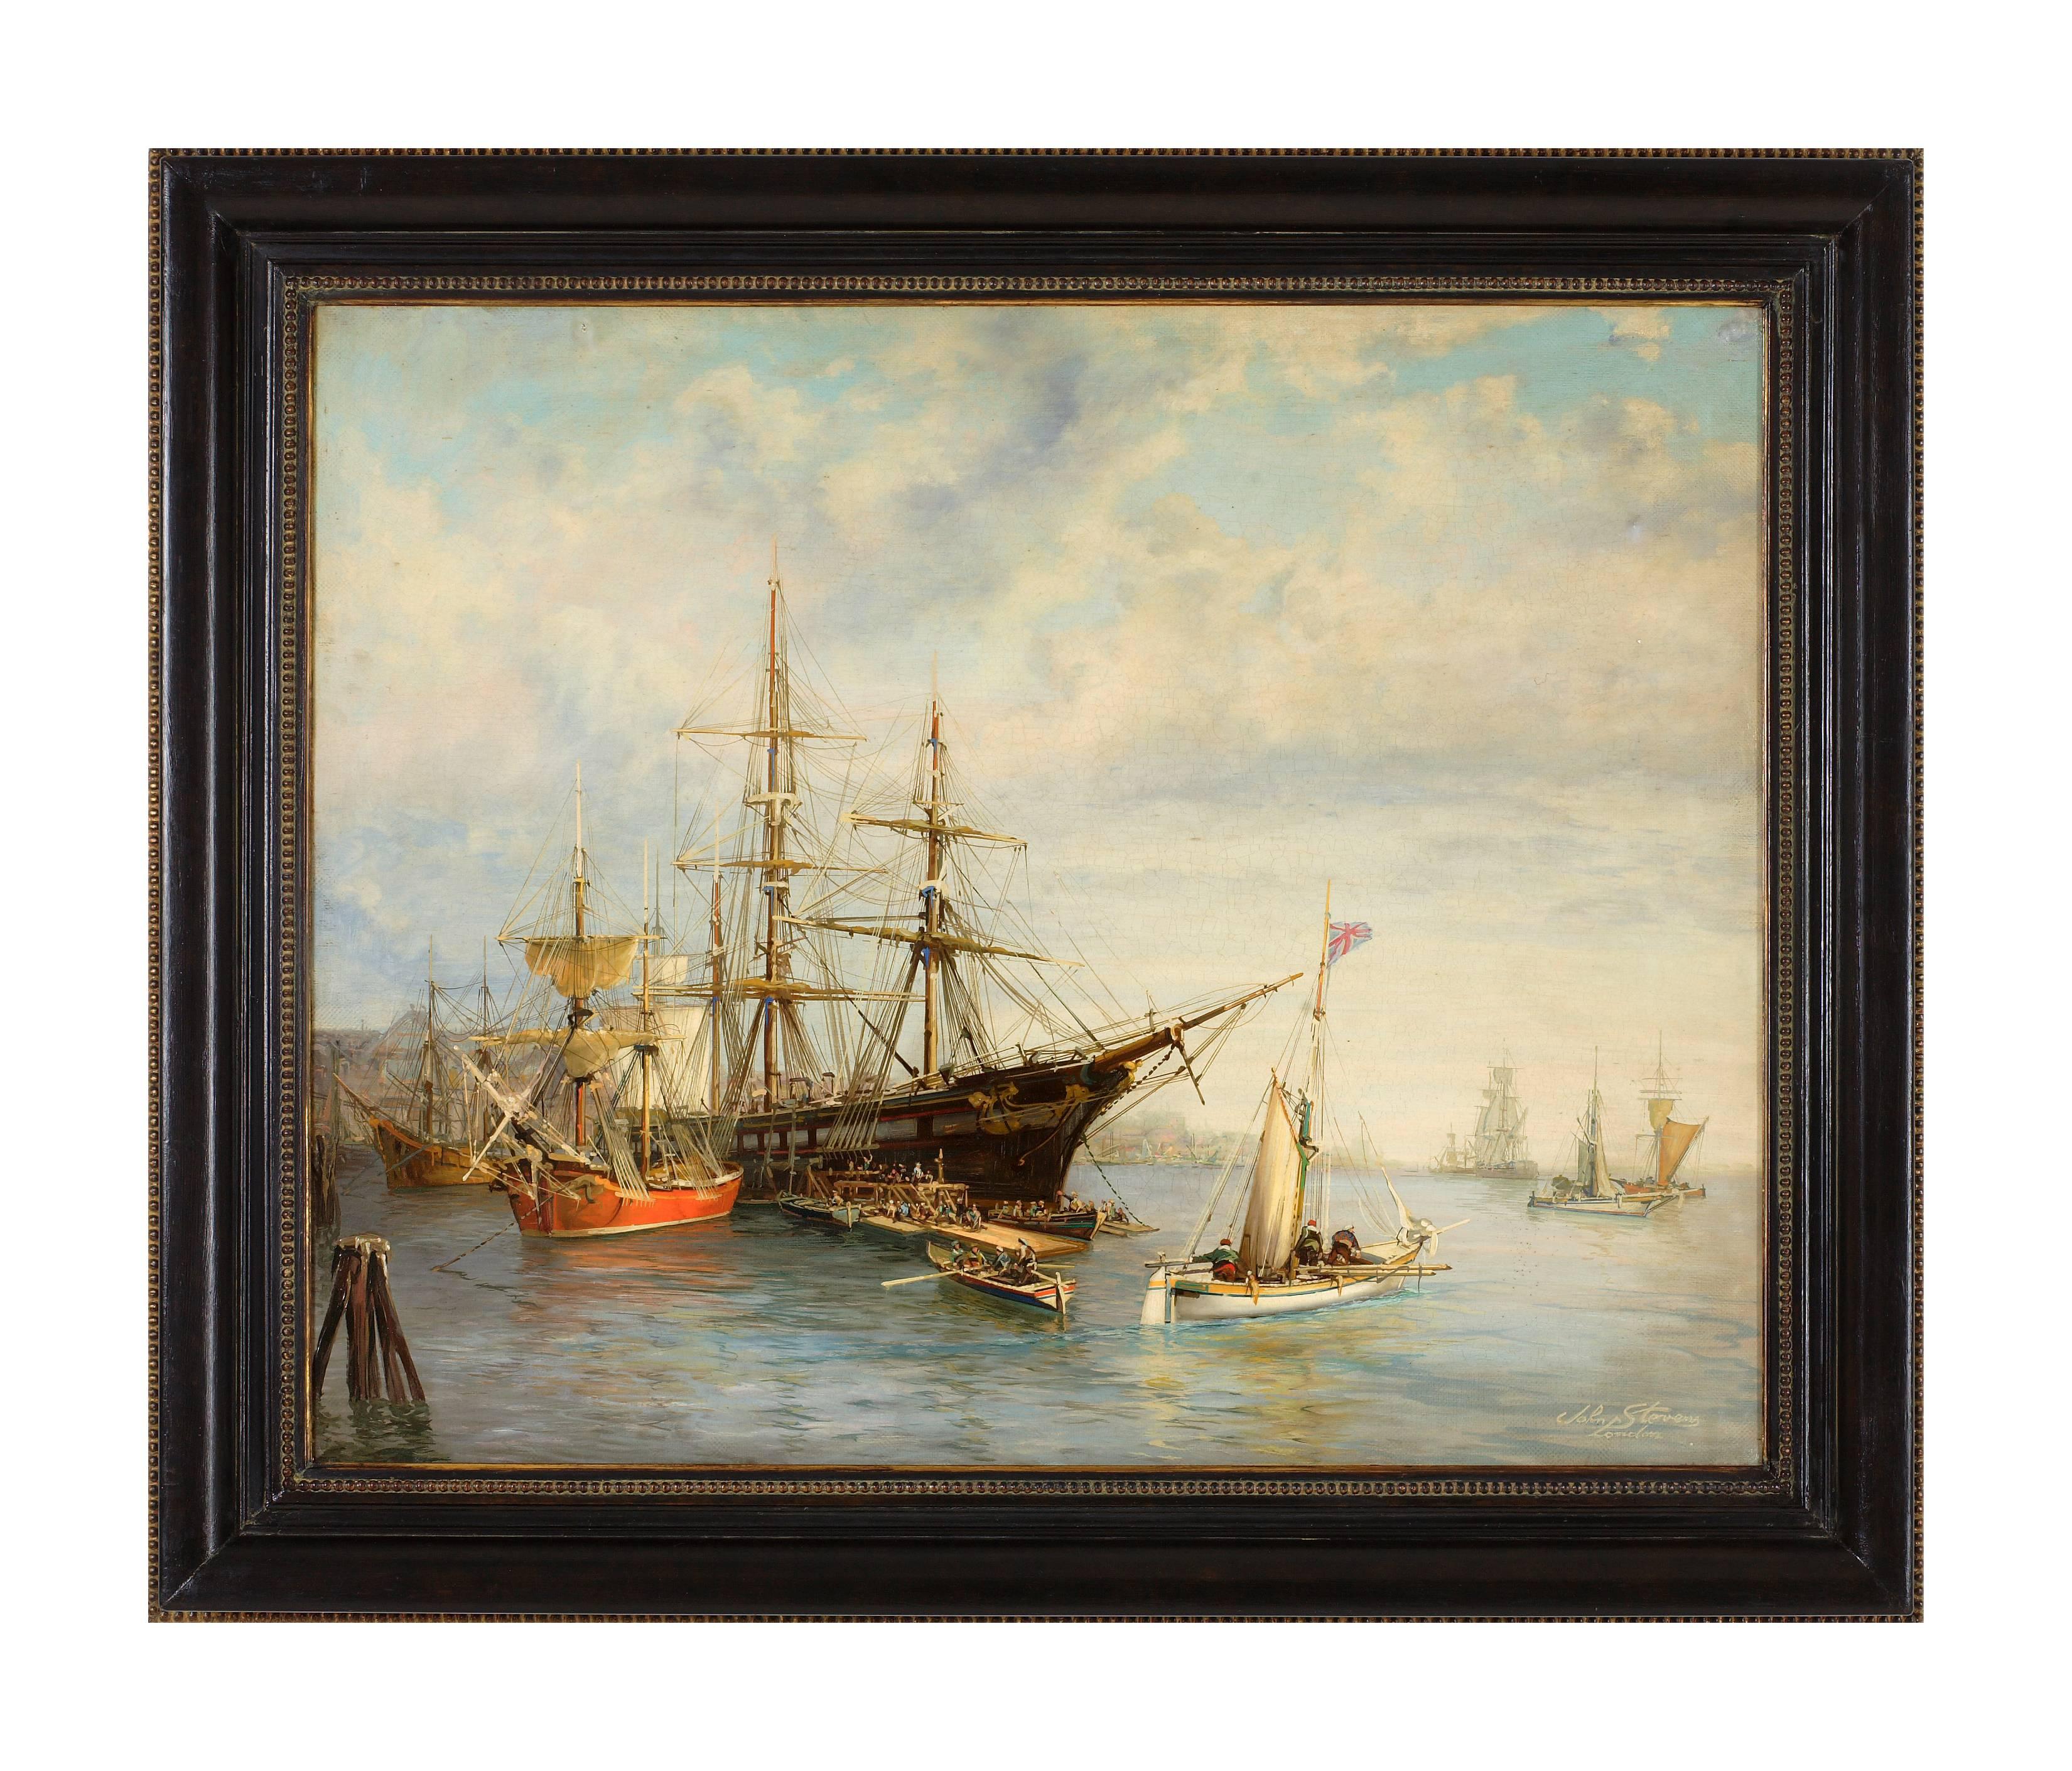 SEAPORT - John Stevens Italia 2008 - Oil on canvas cm.80x100. 
Mohogany laquered wooden frame.